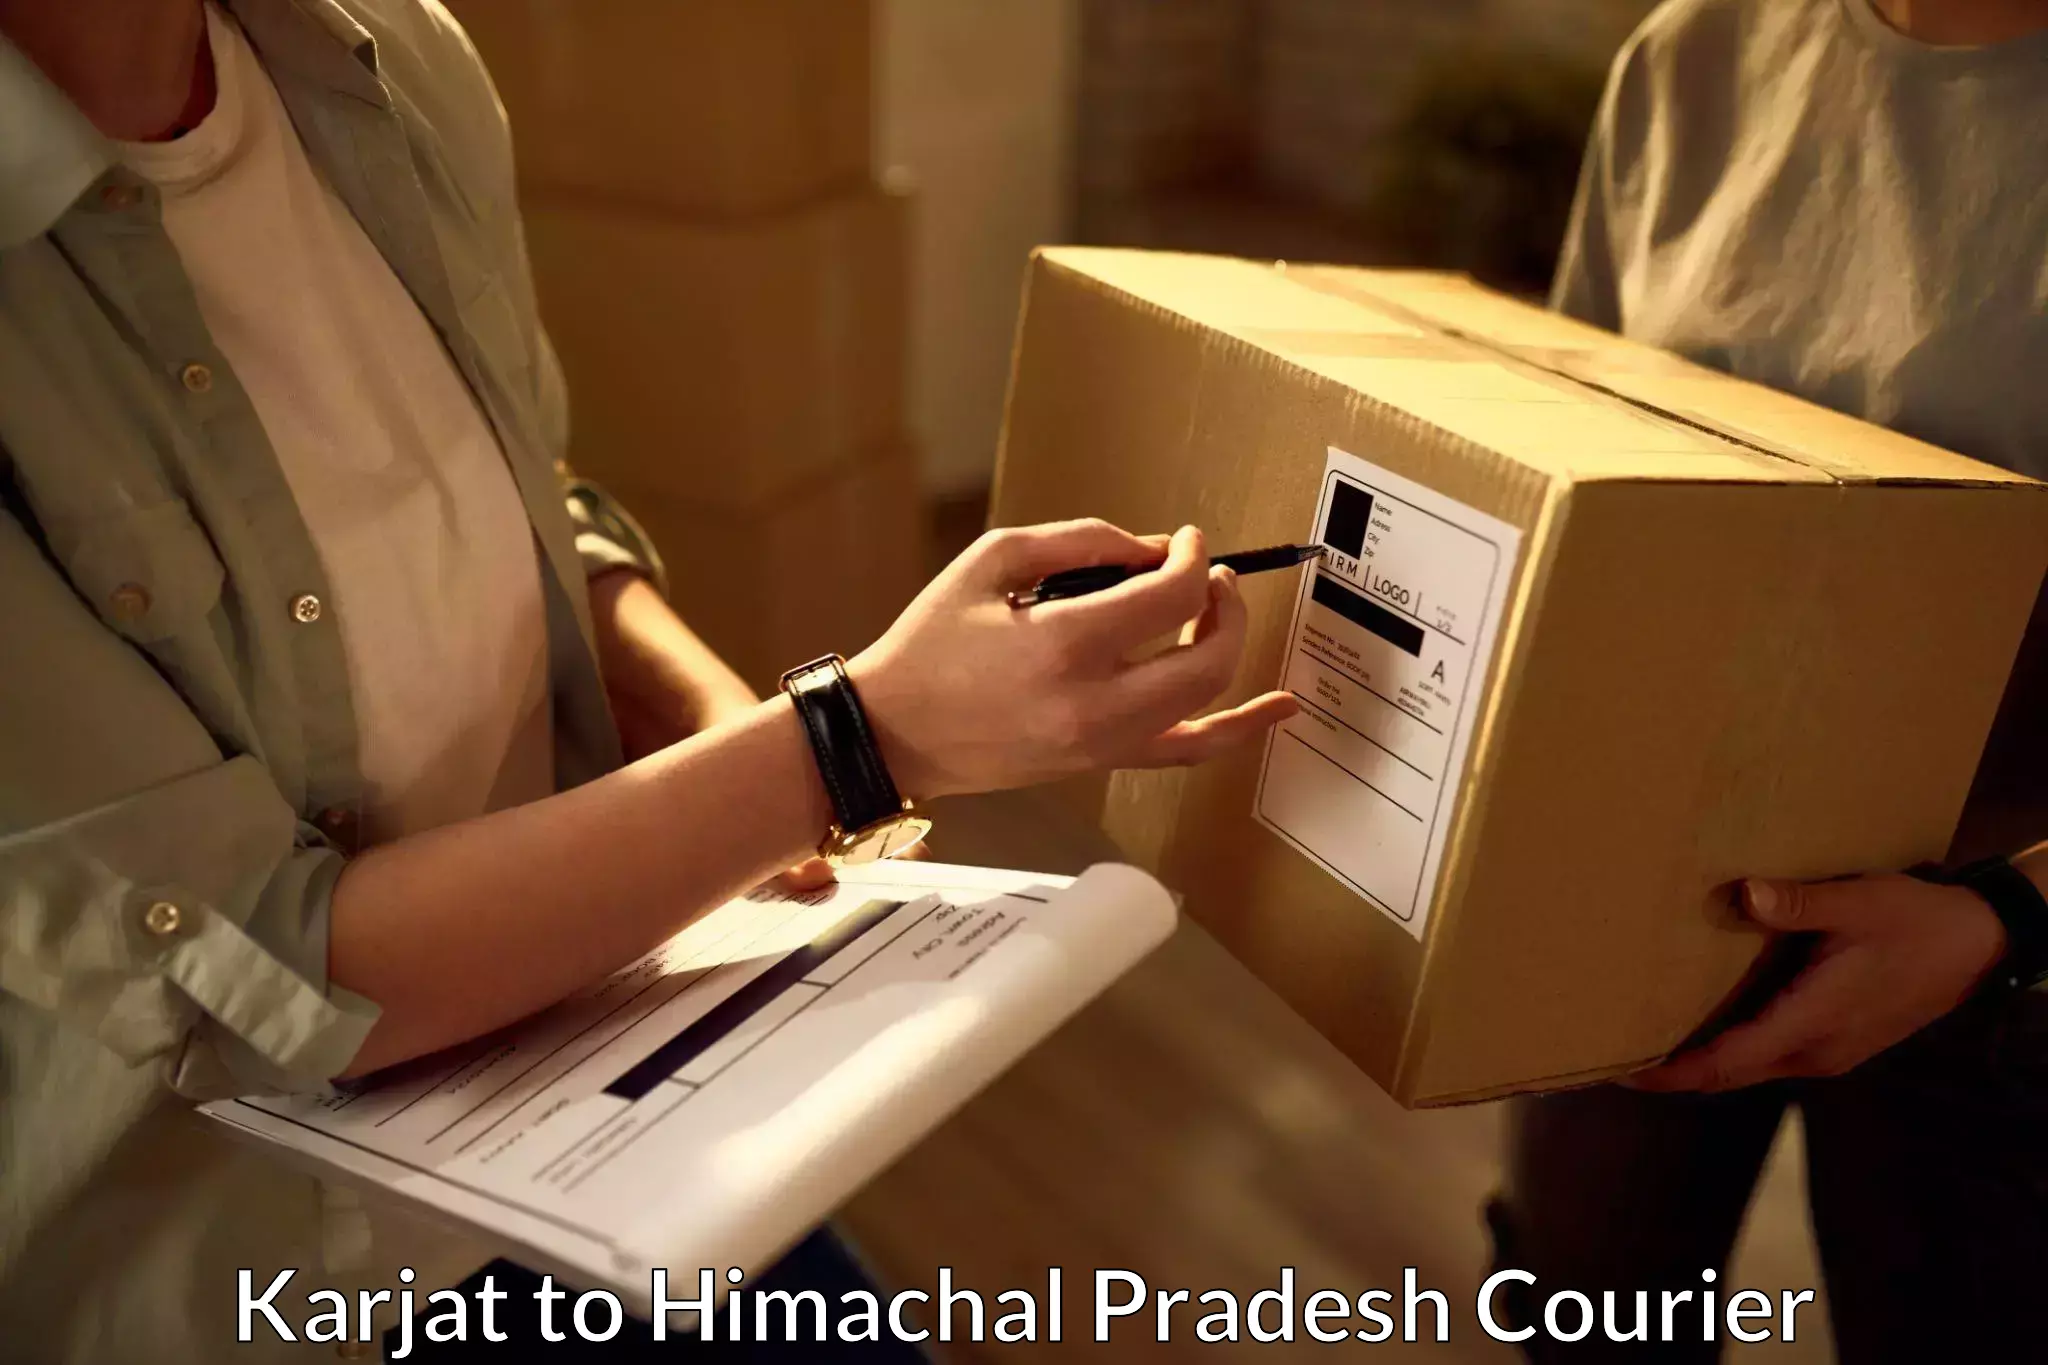 Professional courier handling Karjat to Baijnath